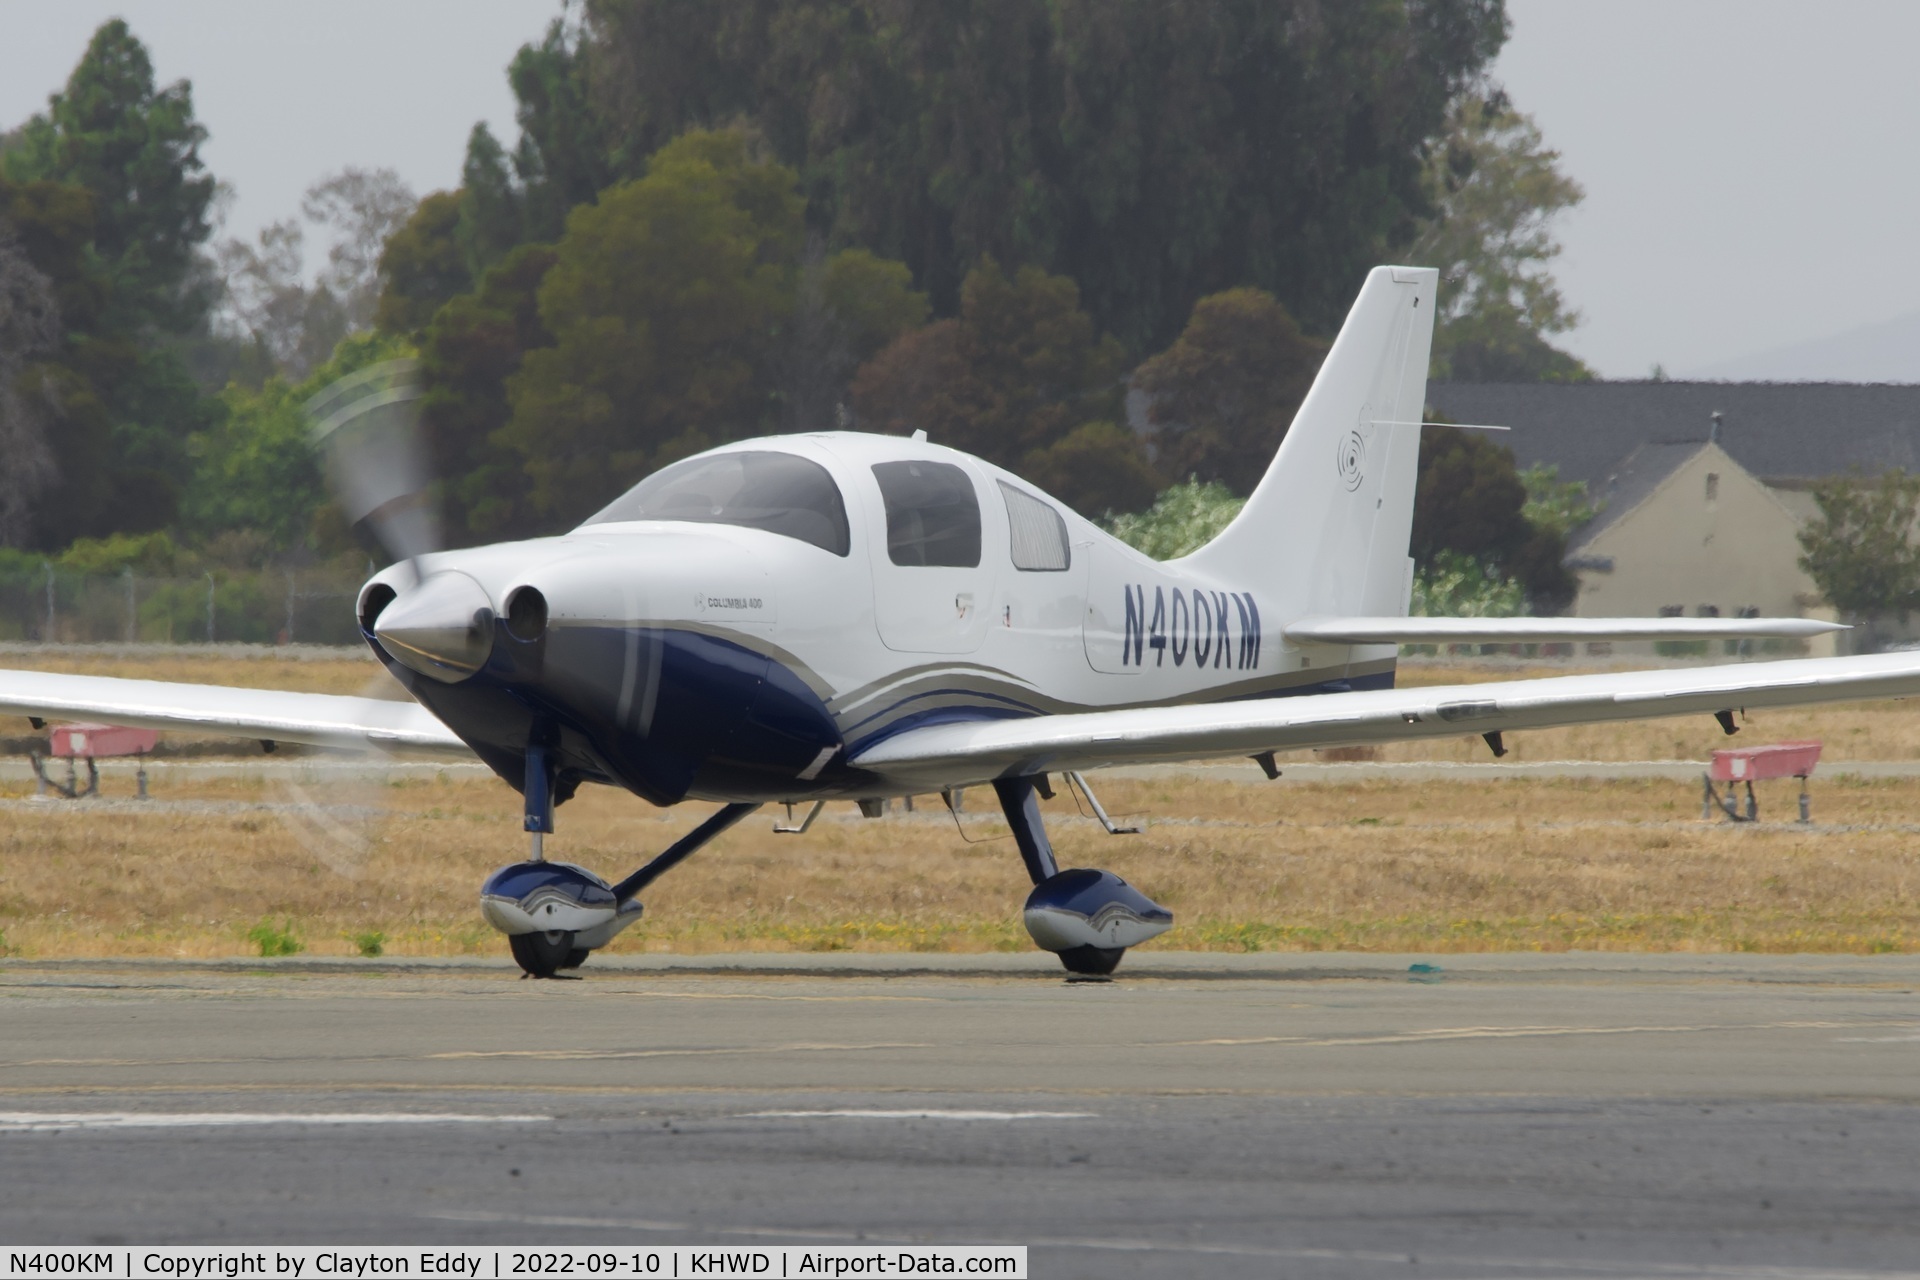 N400KM, 2006 Columbia Aircraft Mfg LC41-550FG C/N 41604, Hayward airport in California 2022.